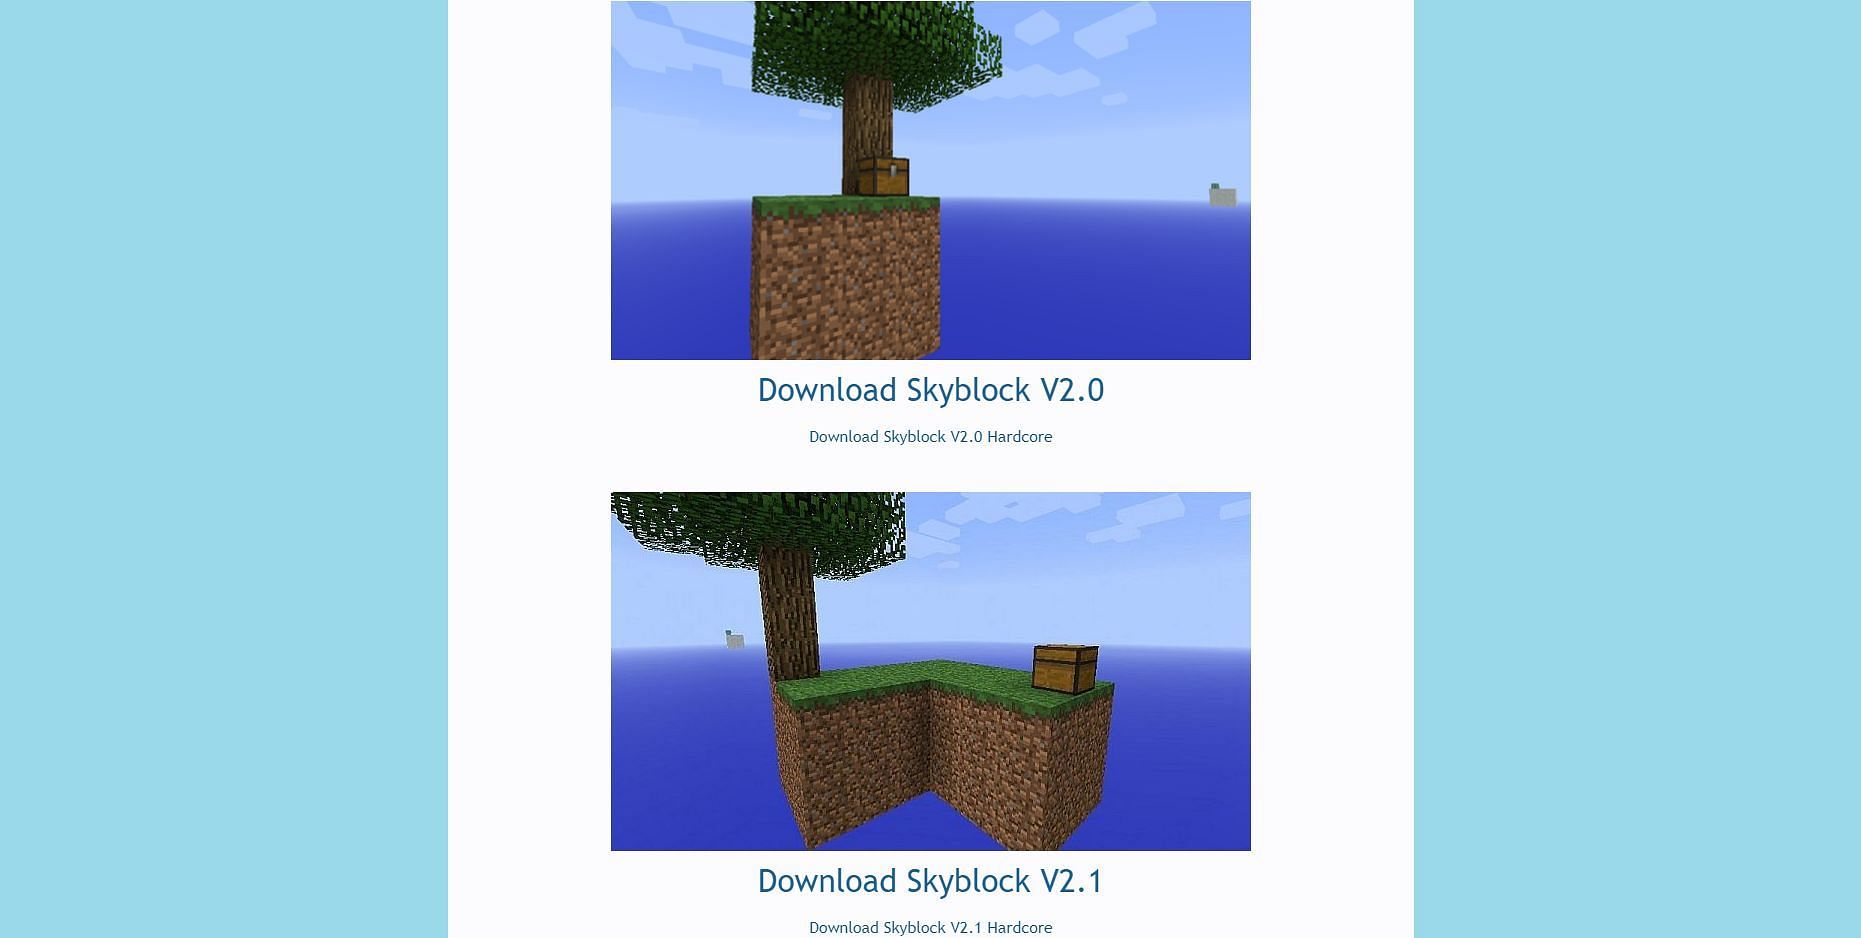 The skyblock world downloads on the skyblock website (Image via Skyblock.net)